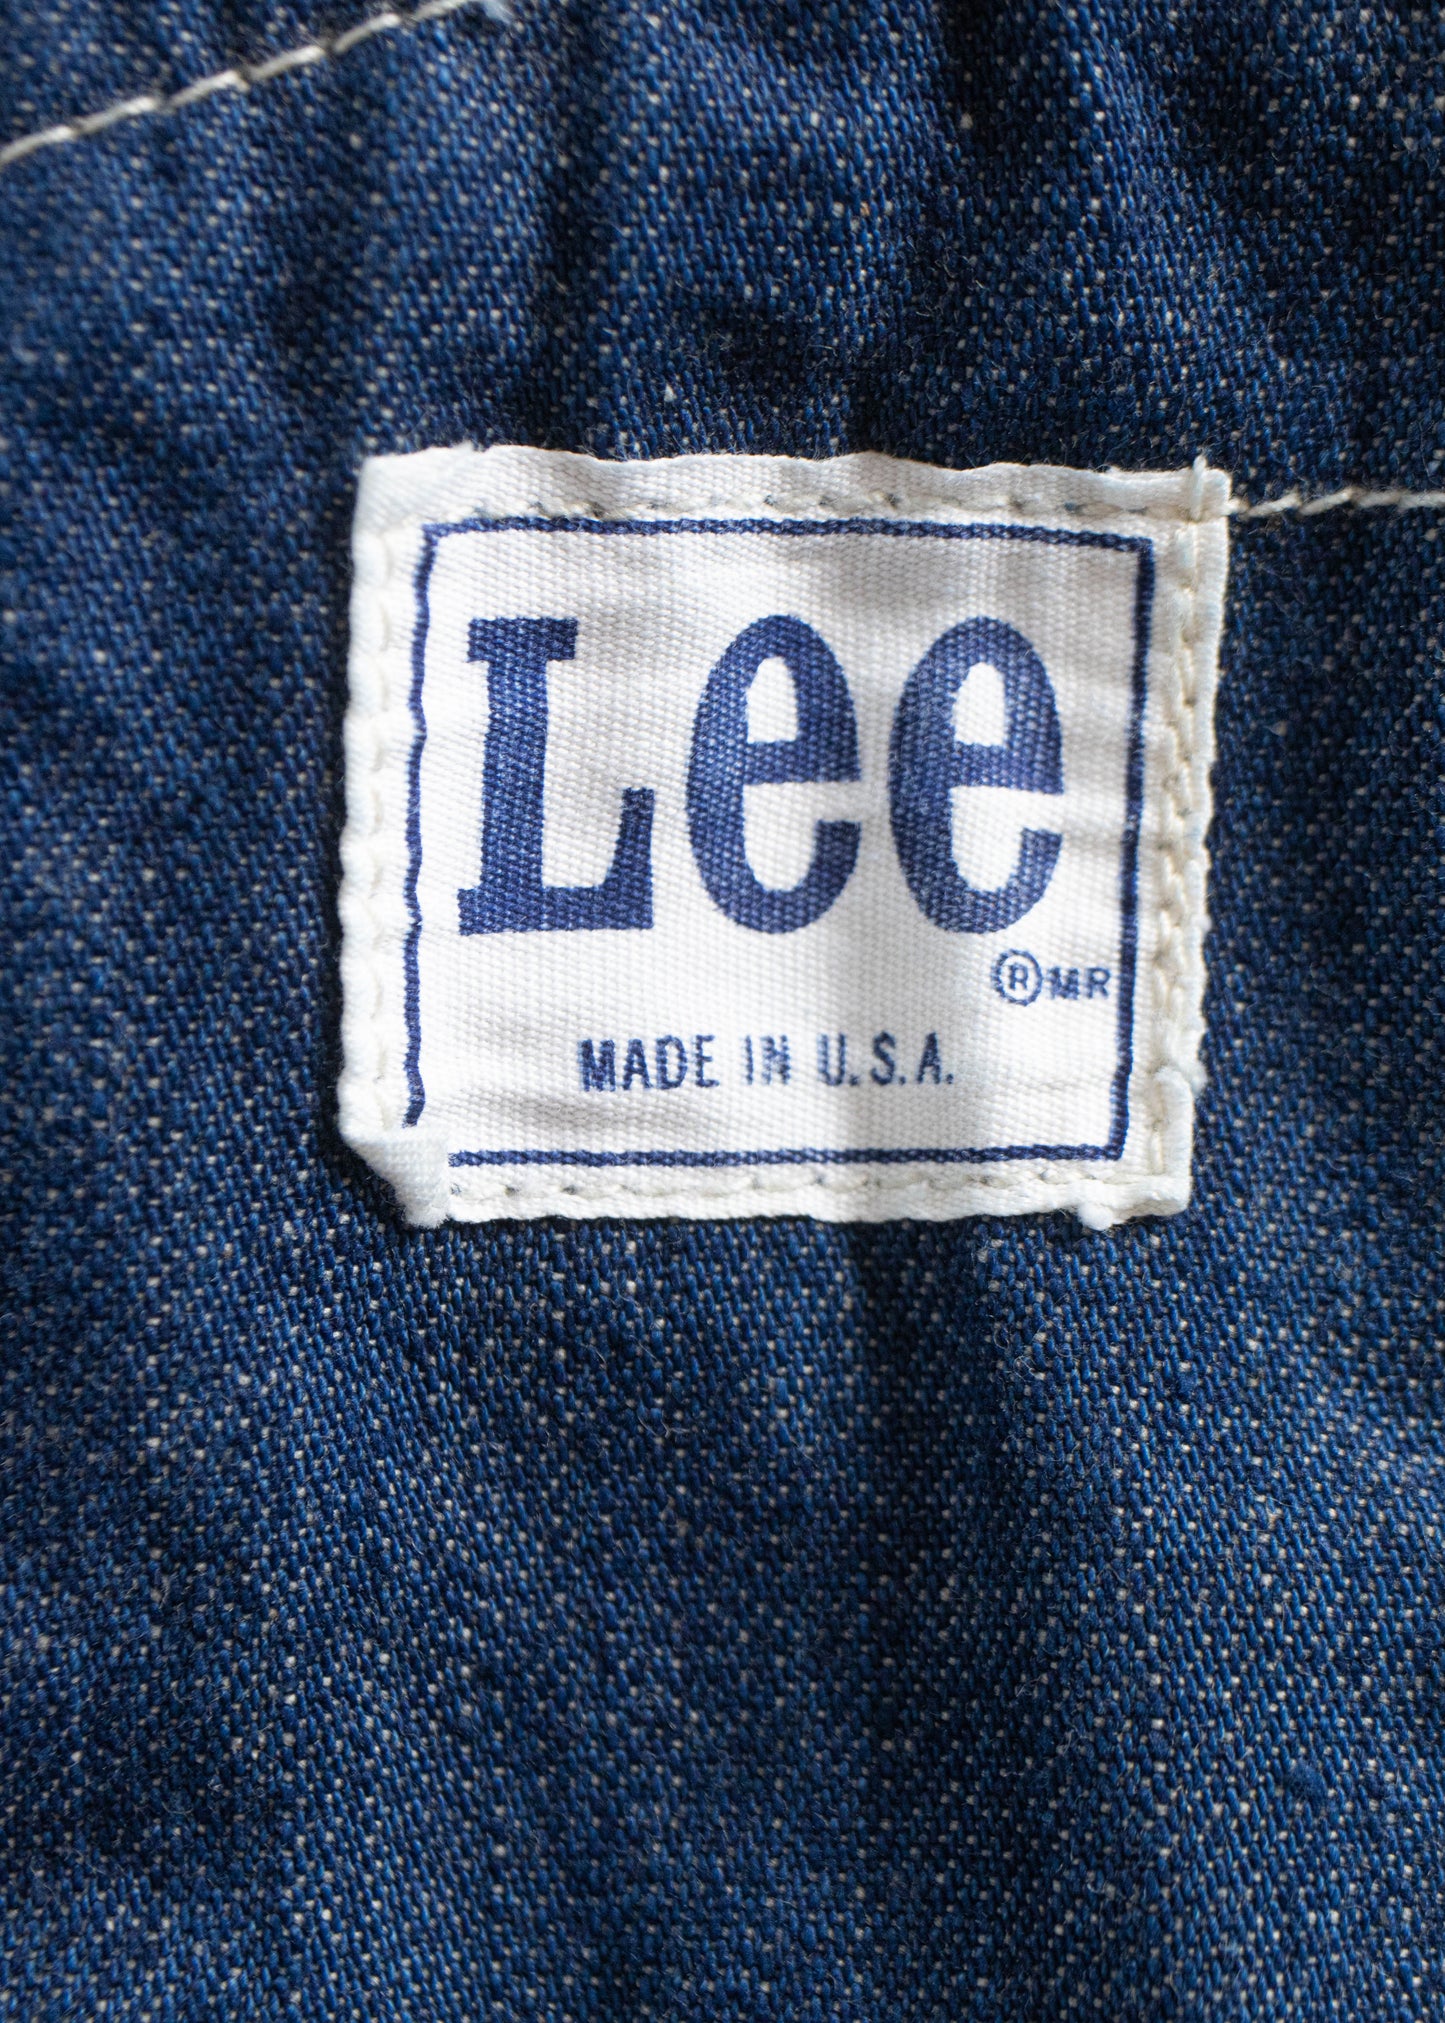 Vintage 1970s Lee Denim Overalls Size XS/S